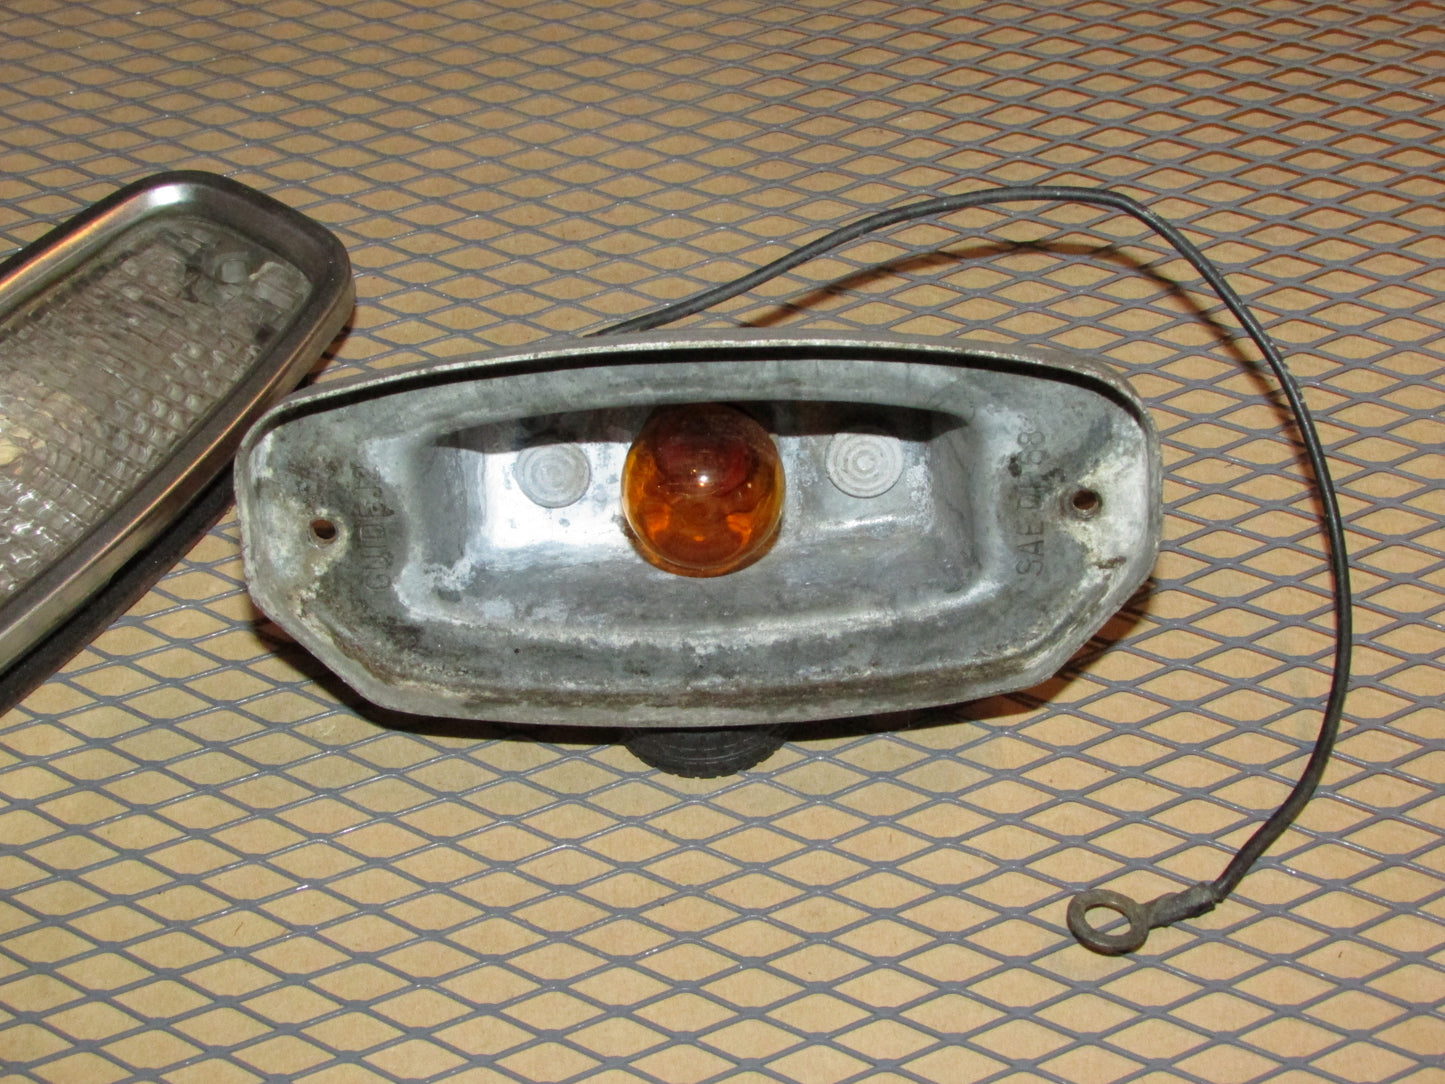 68 Chevrolet Camaro OEM Front Turn Signal Light Lamp